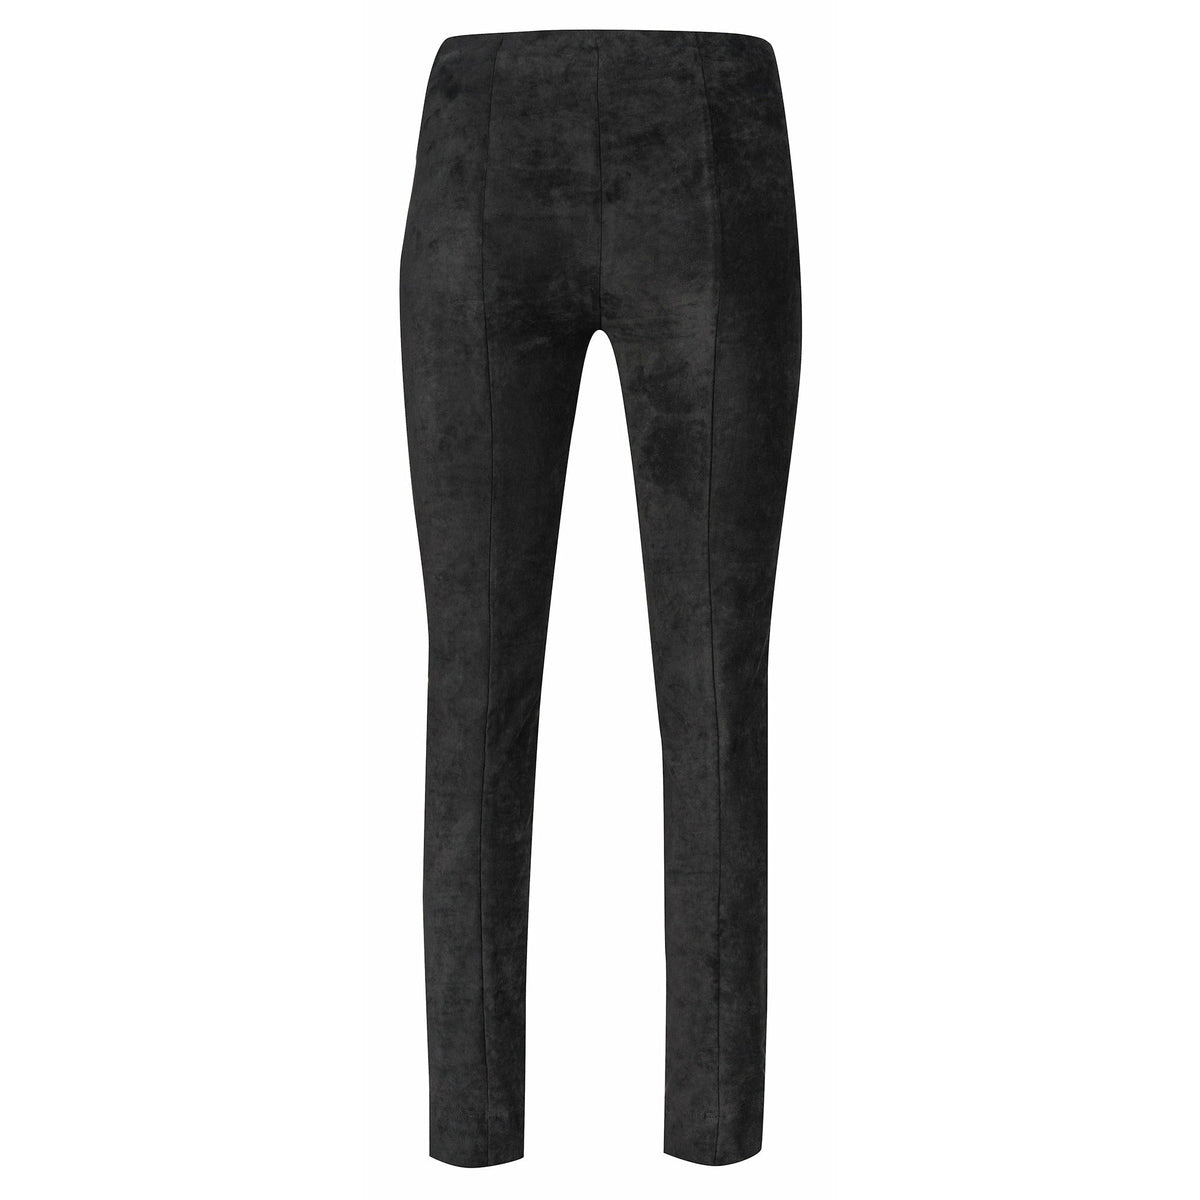 Robell Rose Suede Trousers in Black - Wardrobe Plus